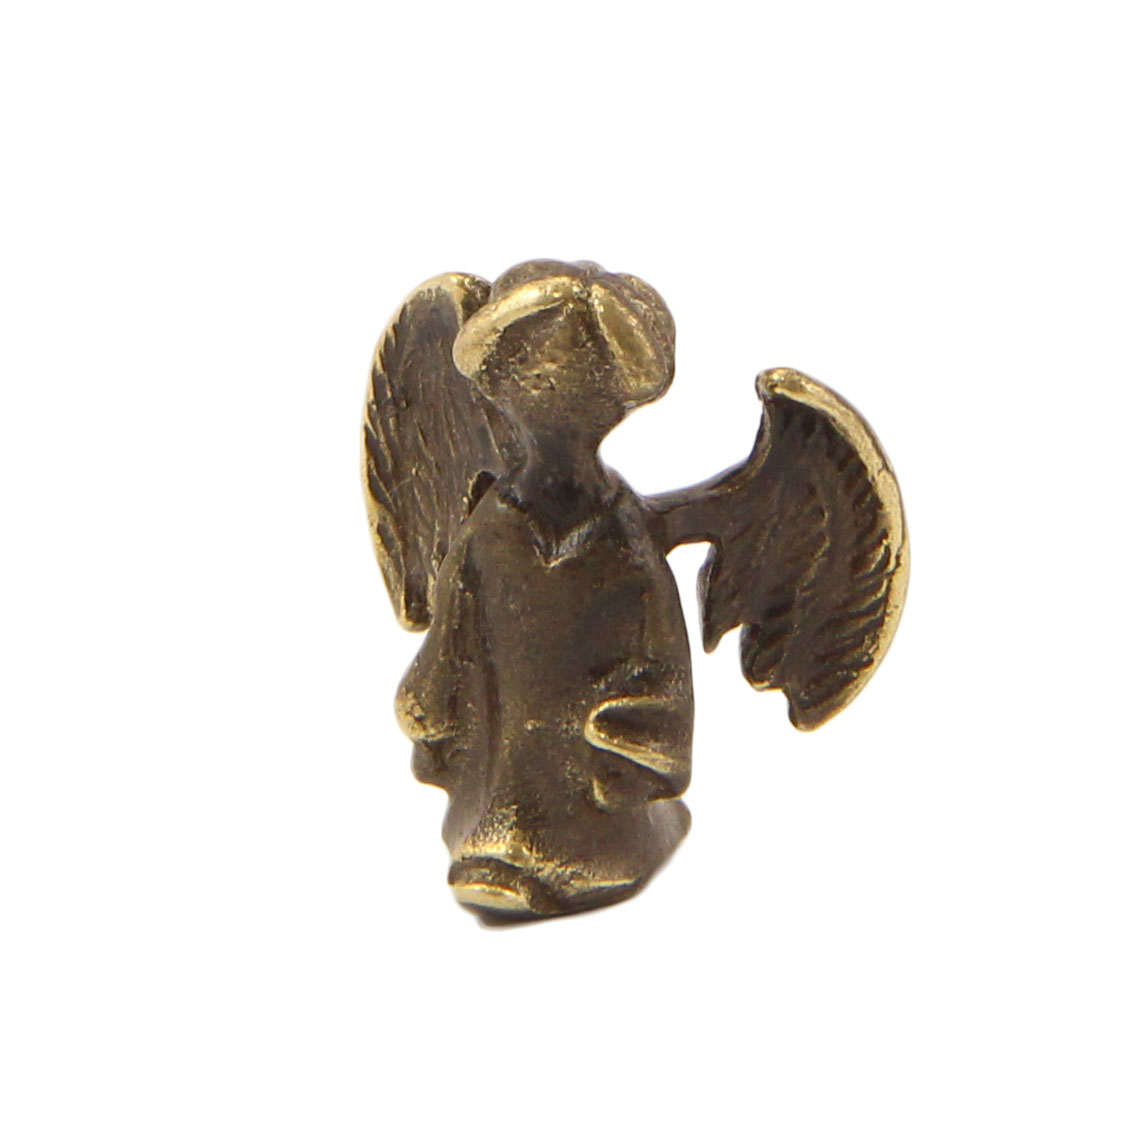 Бронзовый сувенир Ангел безликий малыйФото 15455-06.jpg